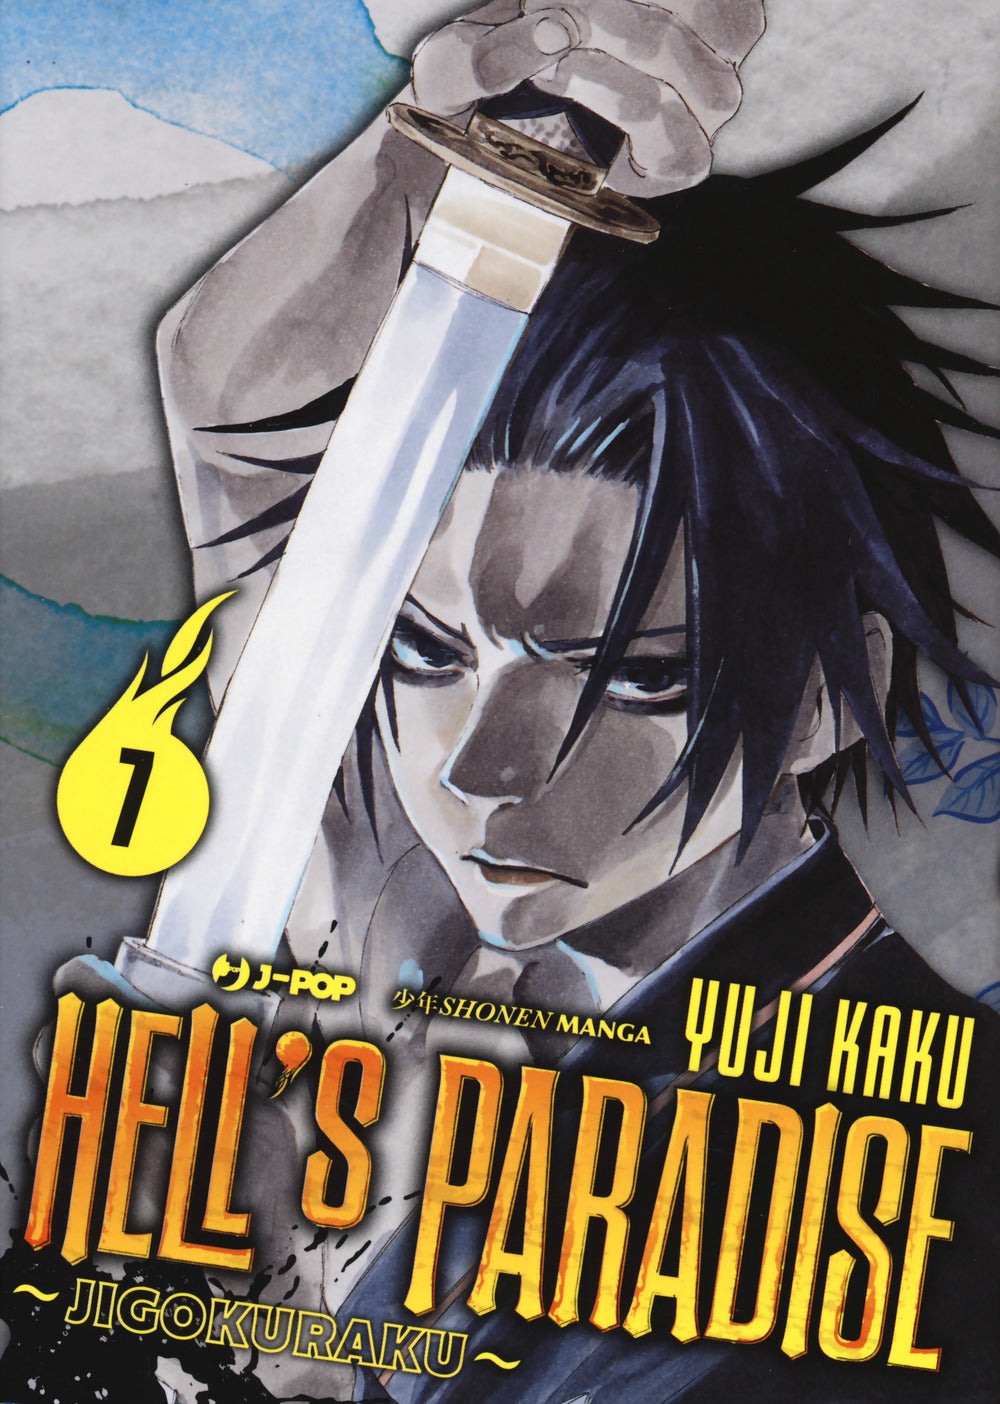 Hell's paradise. Jigokuraku. Vol. 7.